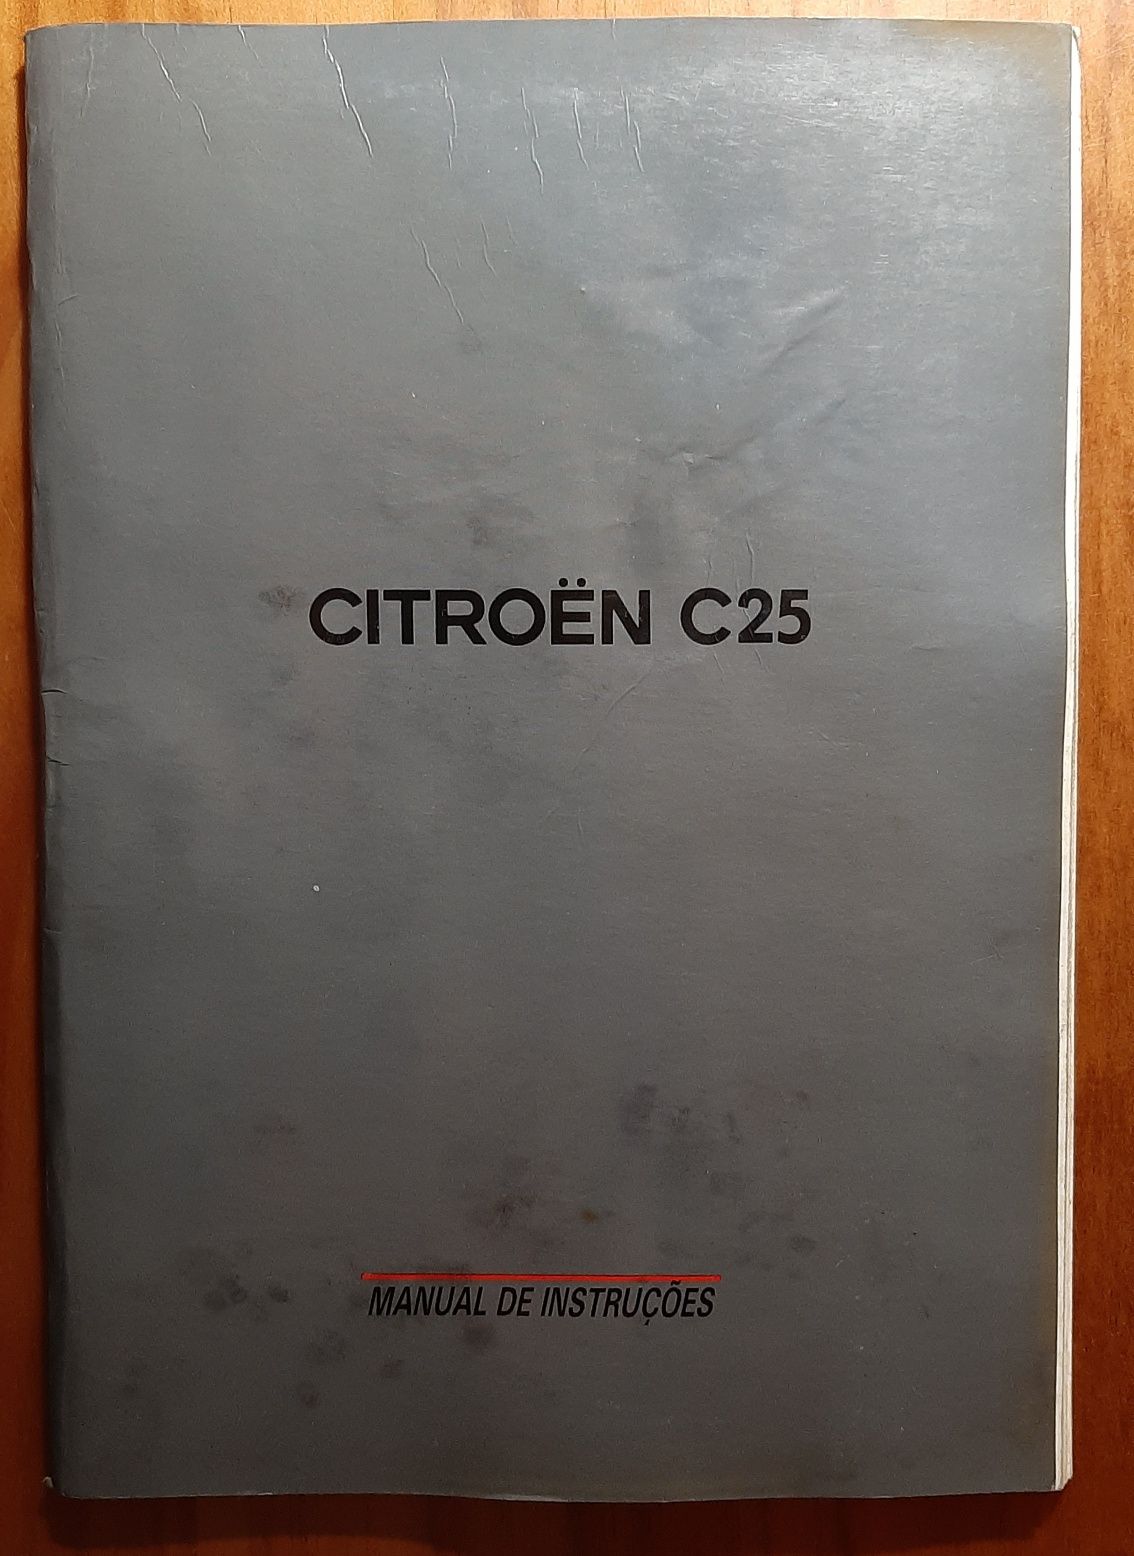 Manual de instruções - Citroen C 25